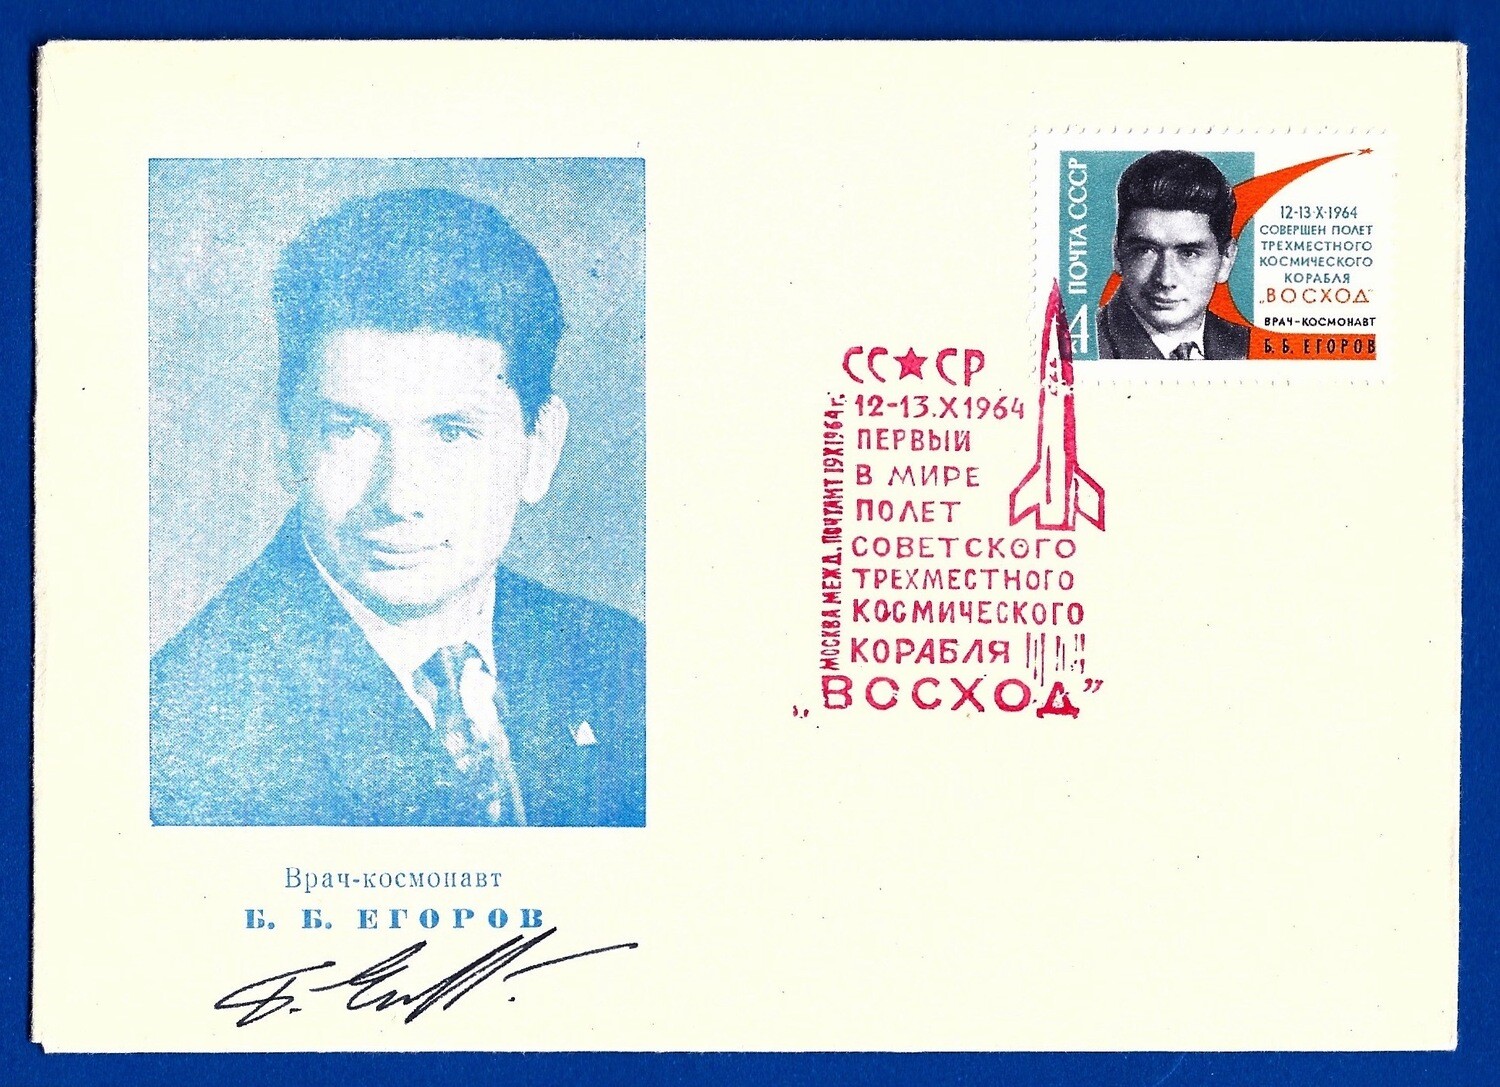 Boris Yegorov Soviet cosmonaut signed cover